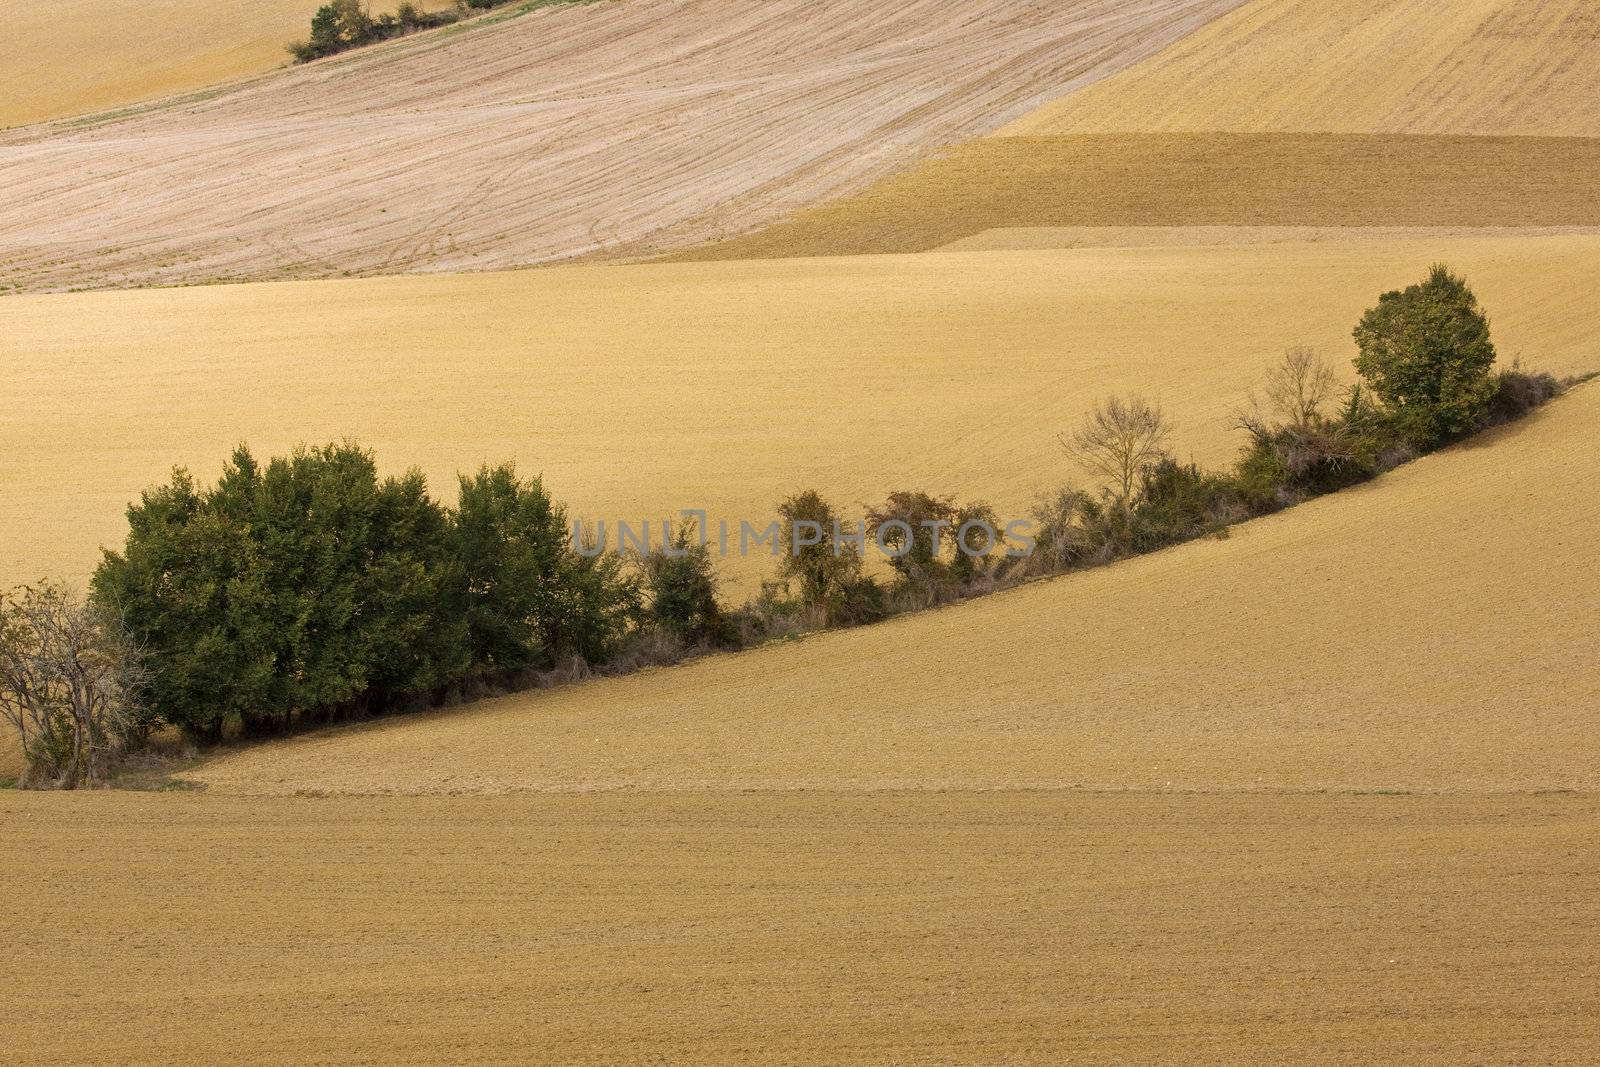 French Rural Landscape in Autumn 2 by pjhpix